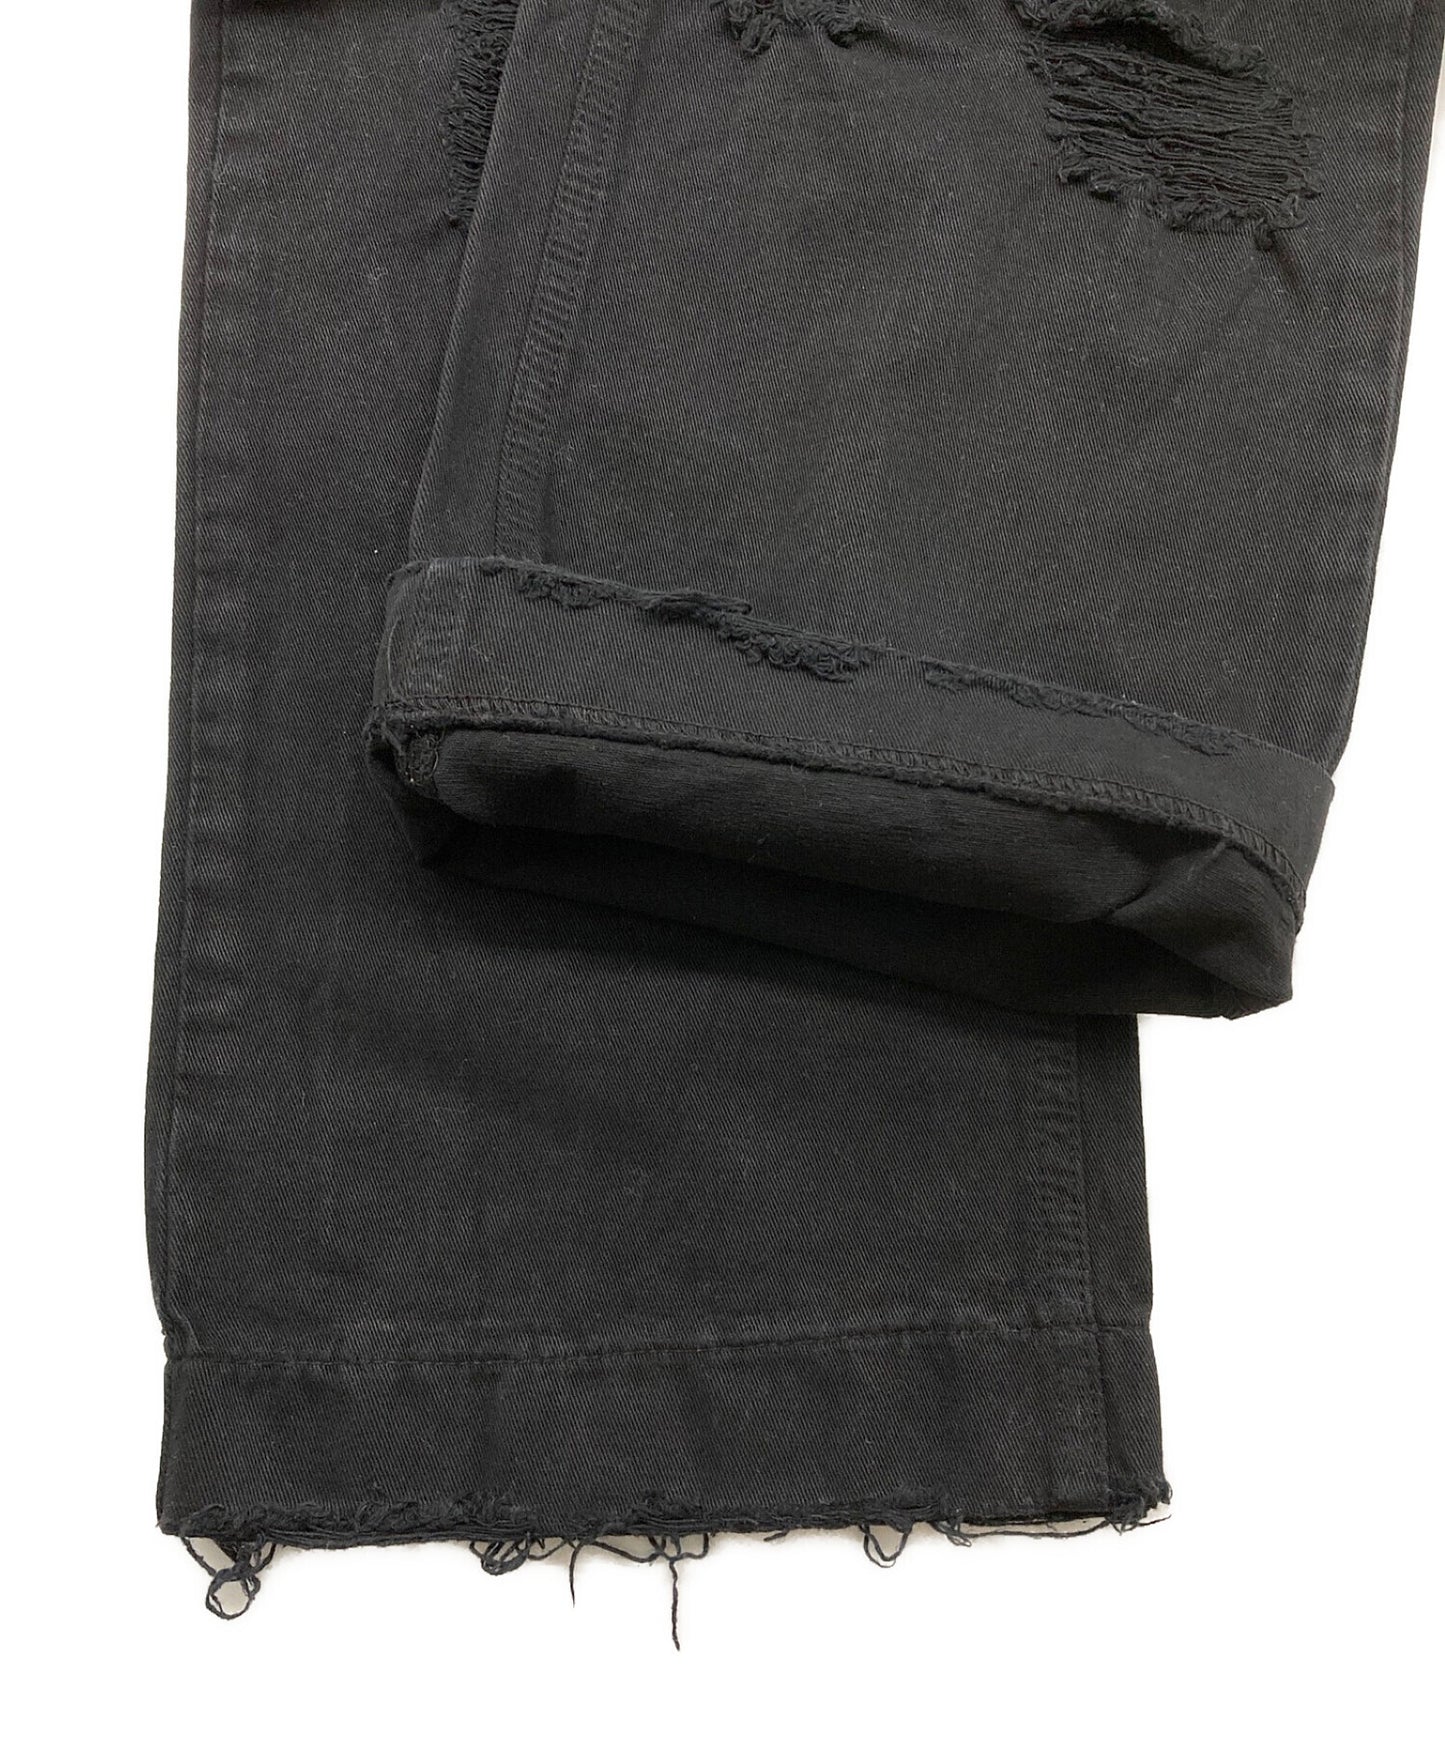 Dolce＆Gabbana壓碎的黑色牛仔布褲